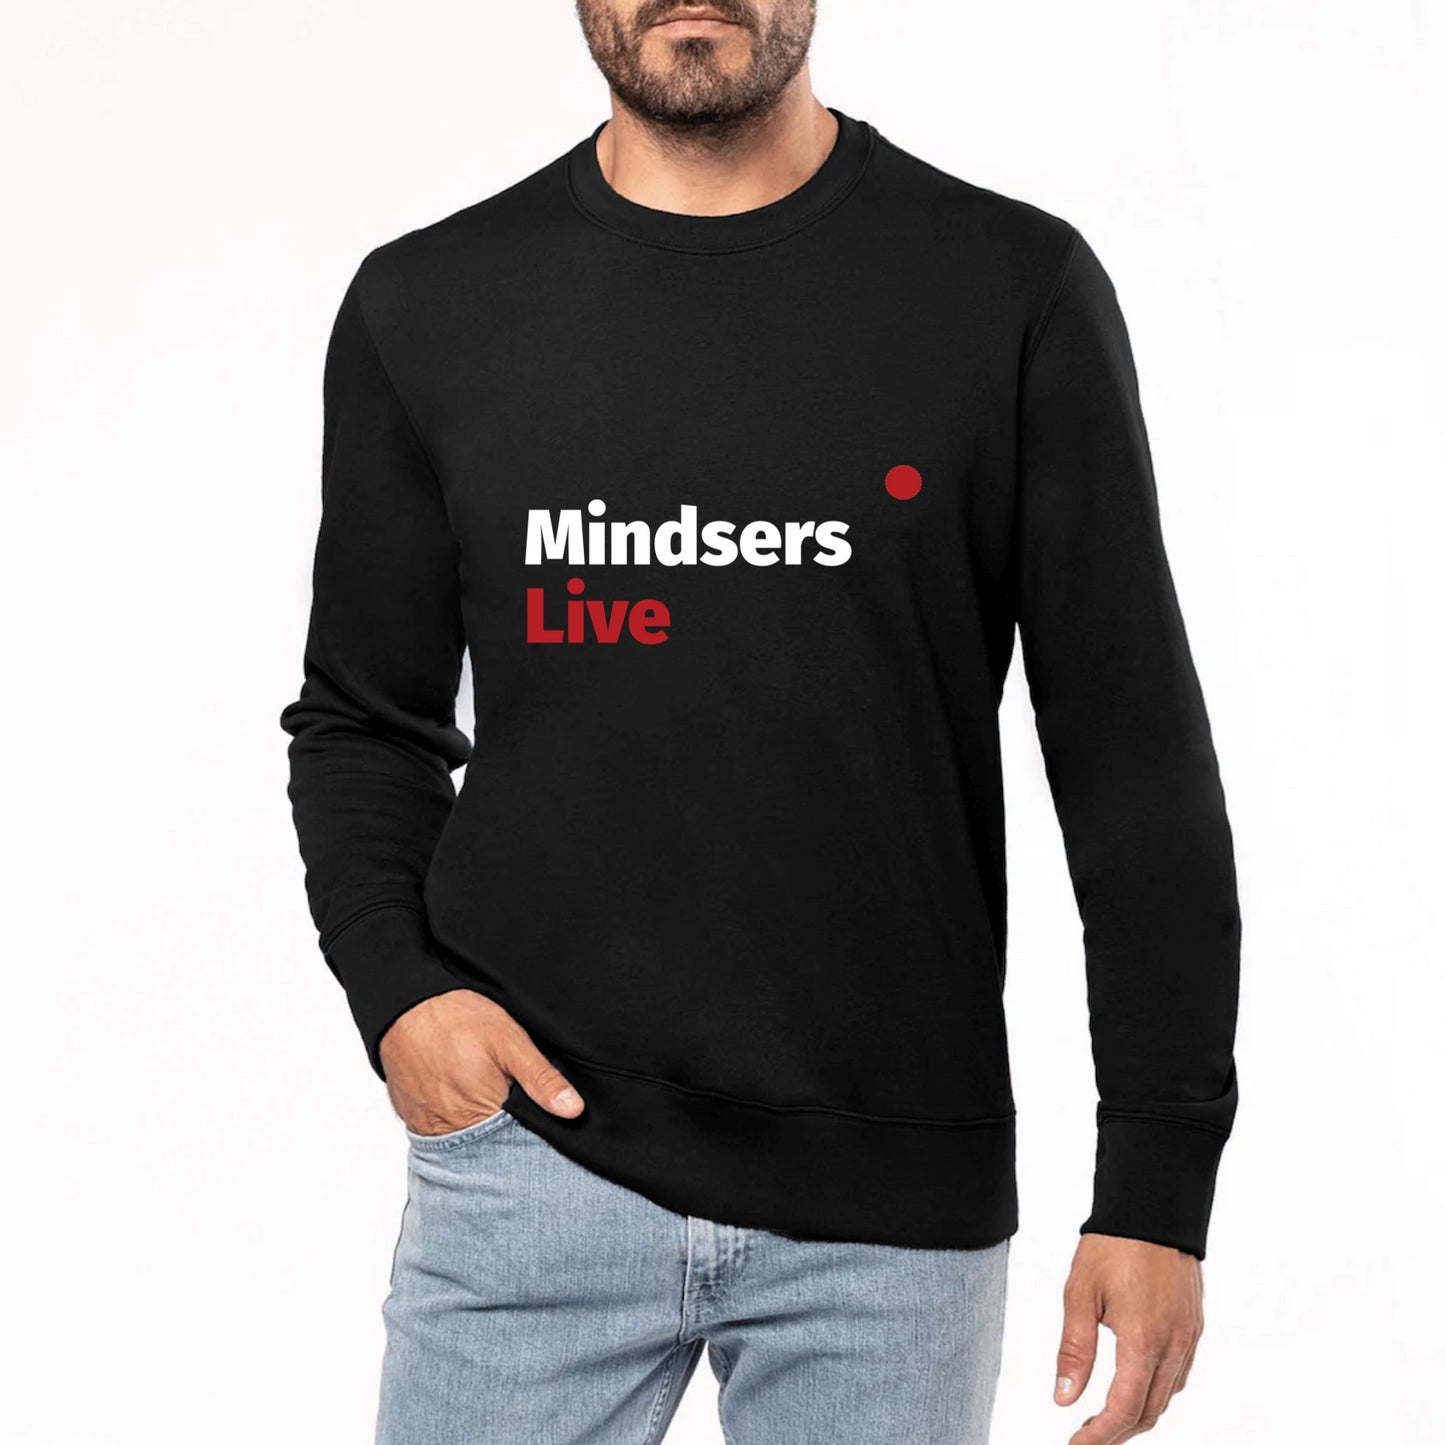 Mindsers Live – sweat-shirt, unisexe, bio